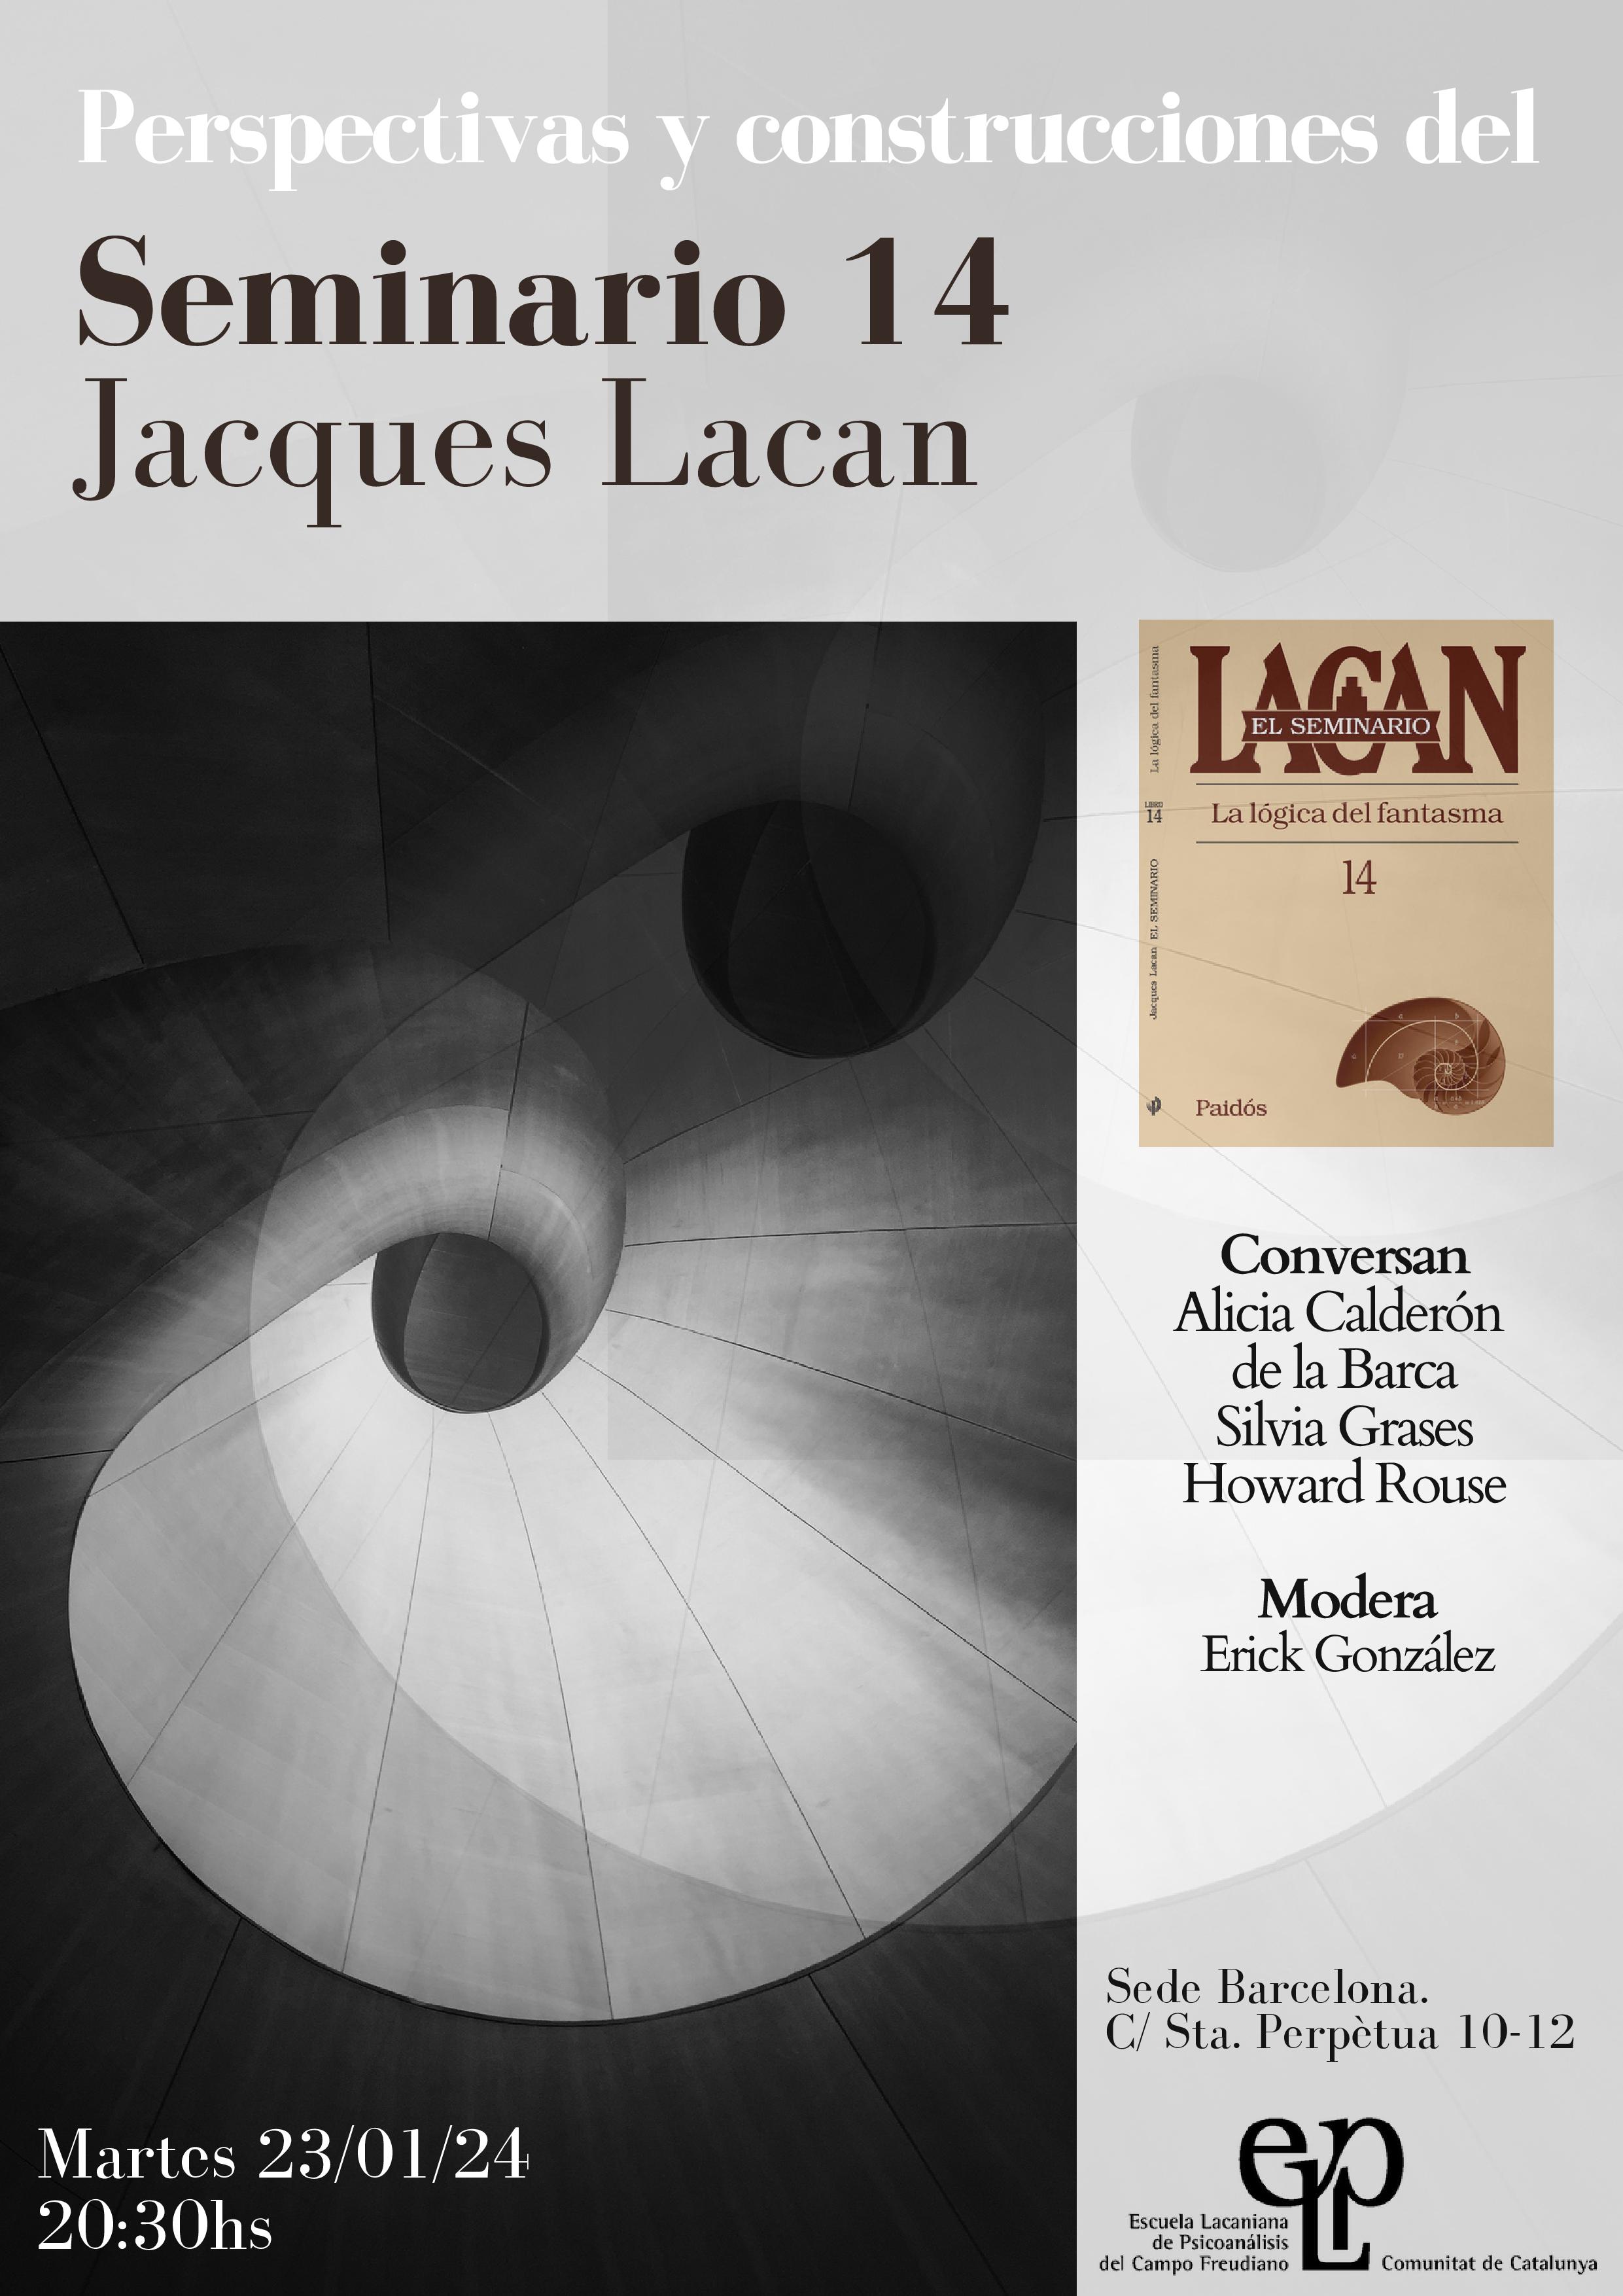 Perspectives y construccions del Seminari 14 de Jacques Lacan